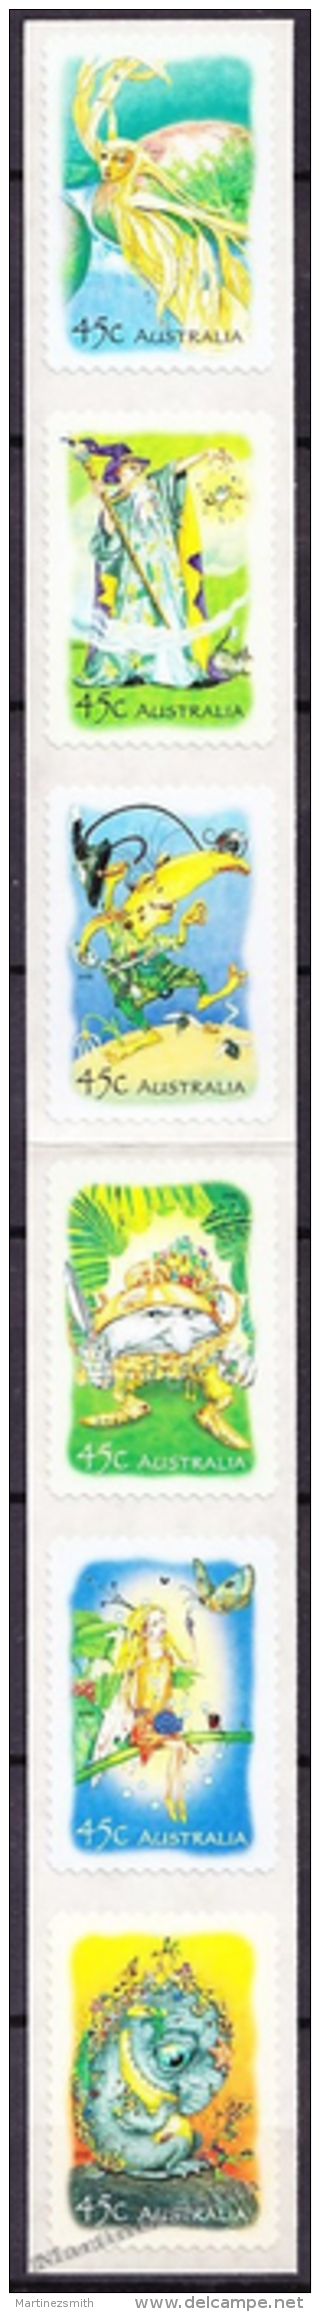 Australie - Australia 2002 Yvert 2065-70, Marsden Magical Forest, Adhesive Strip - MNH - Mint Stamps